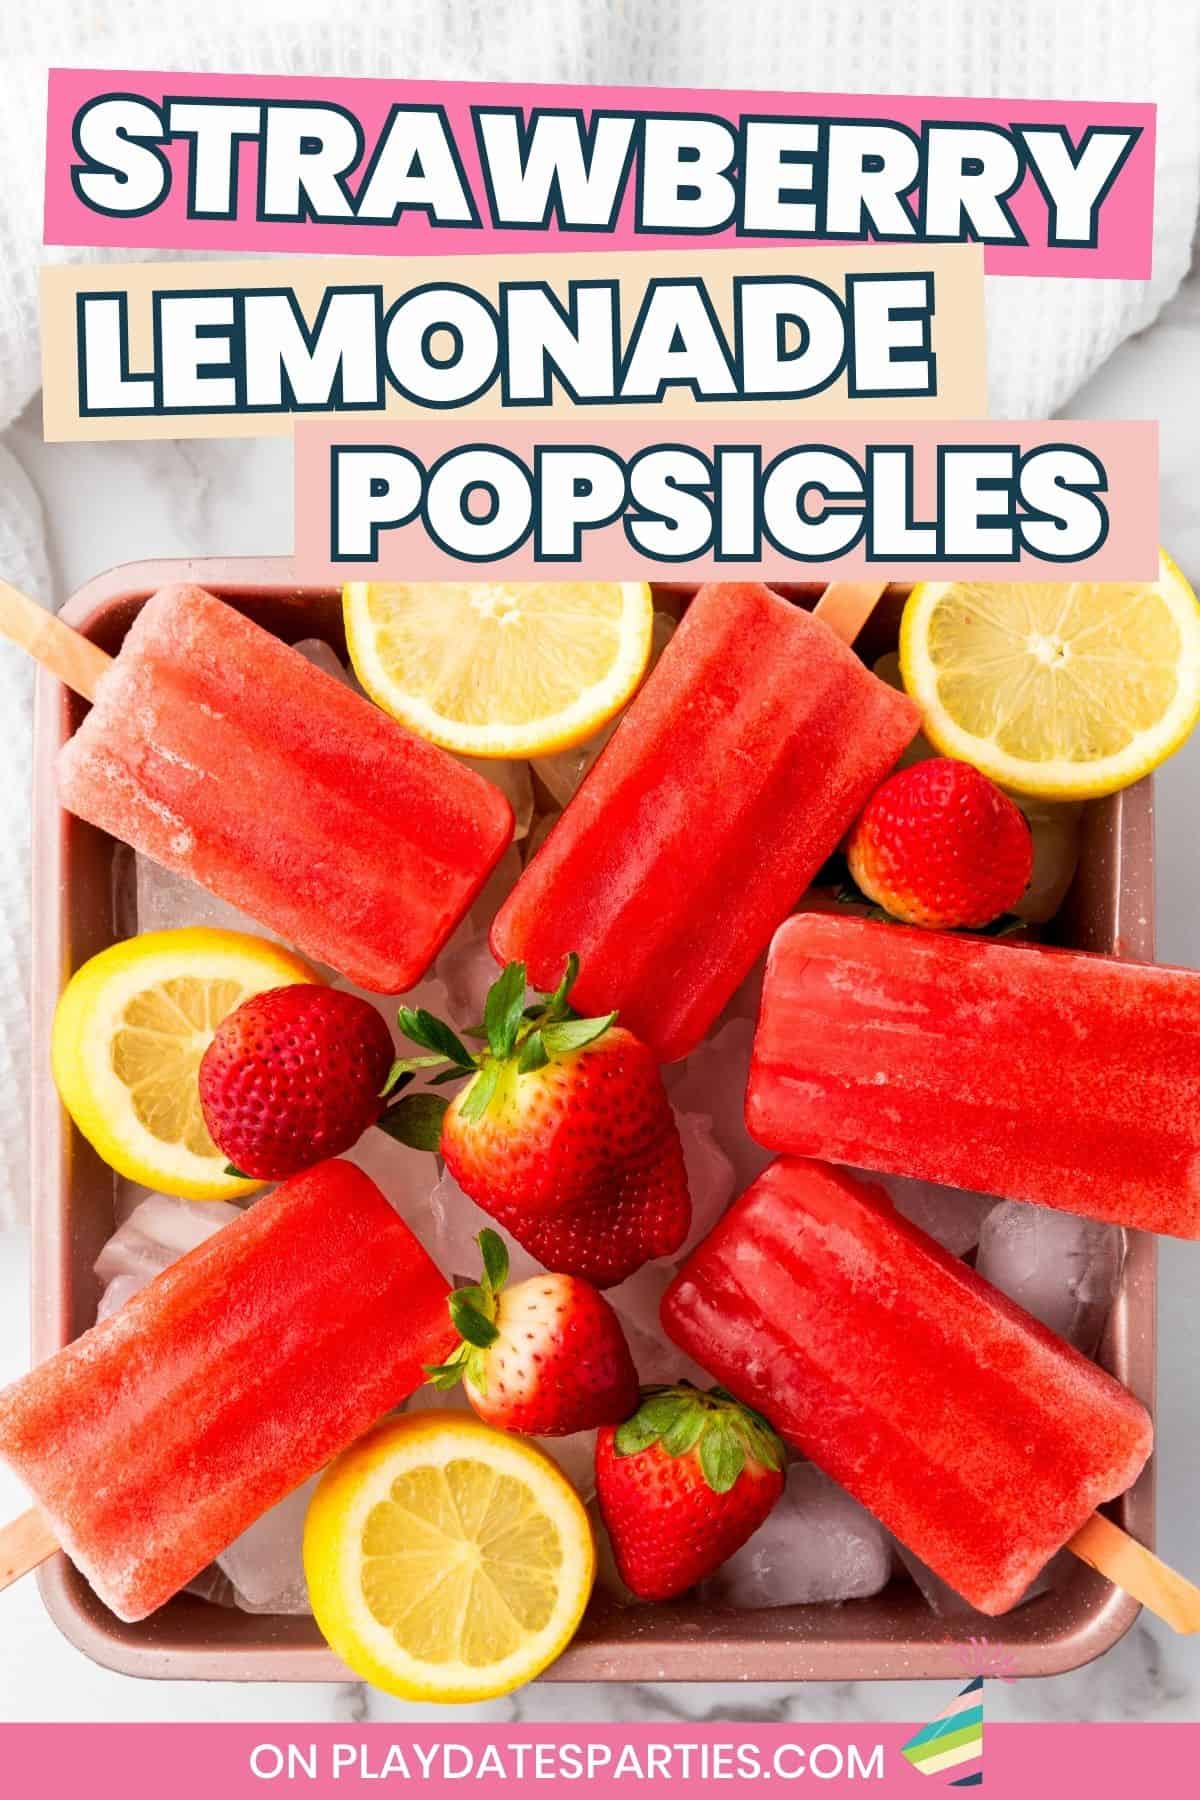 Strawberry Lemonade Popsicles Pin image.